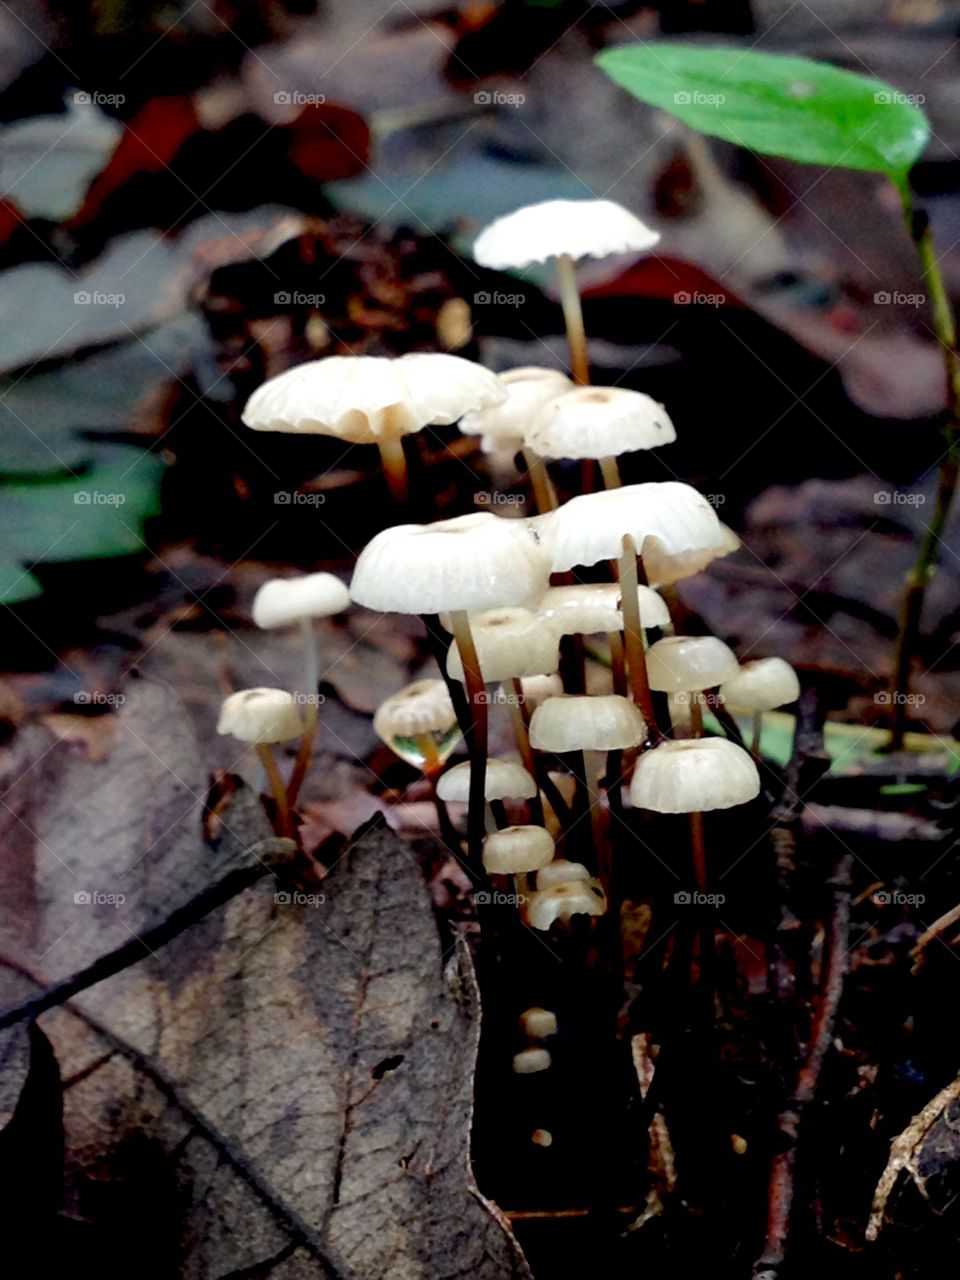 As a fairy tale,magic mushroom